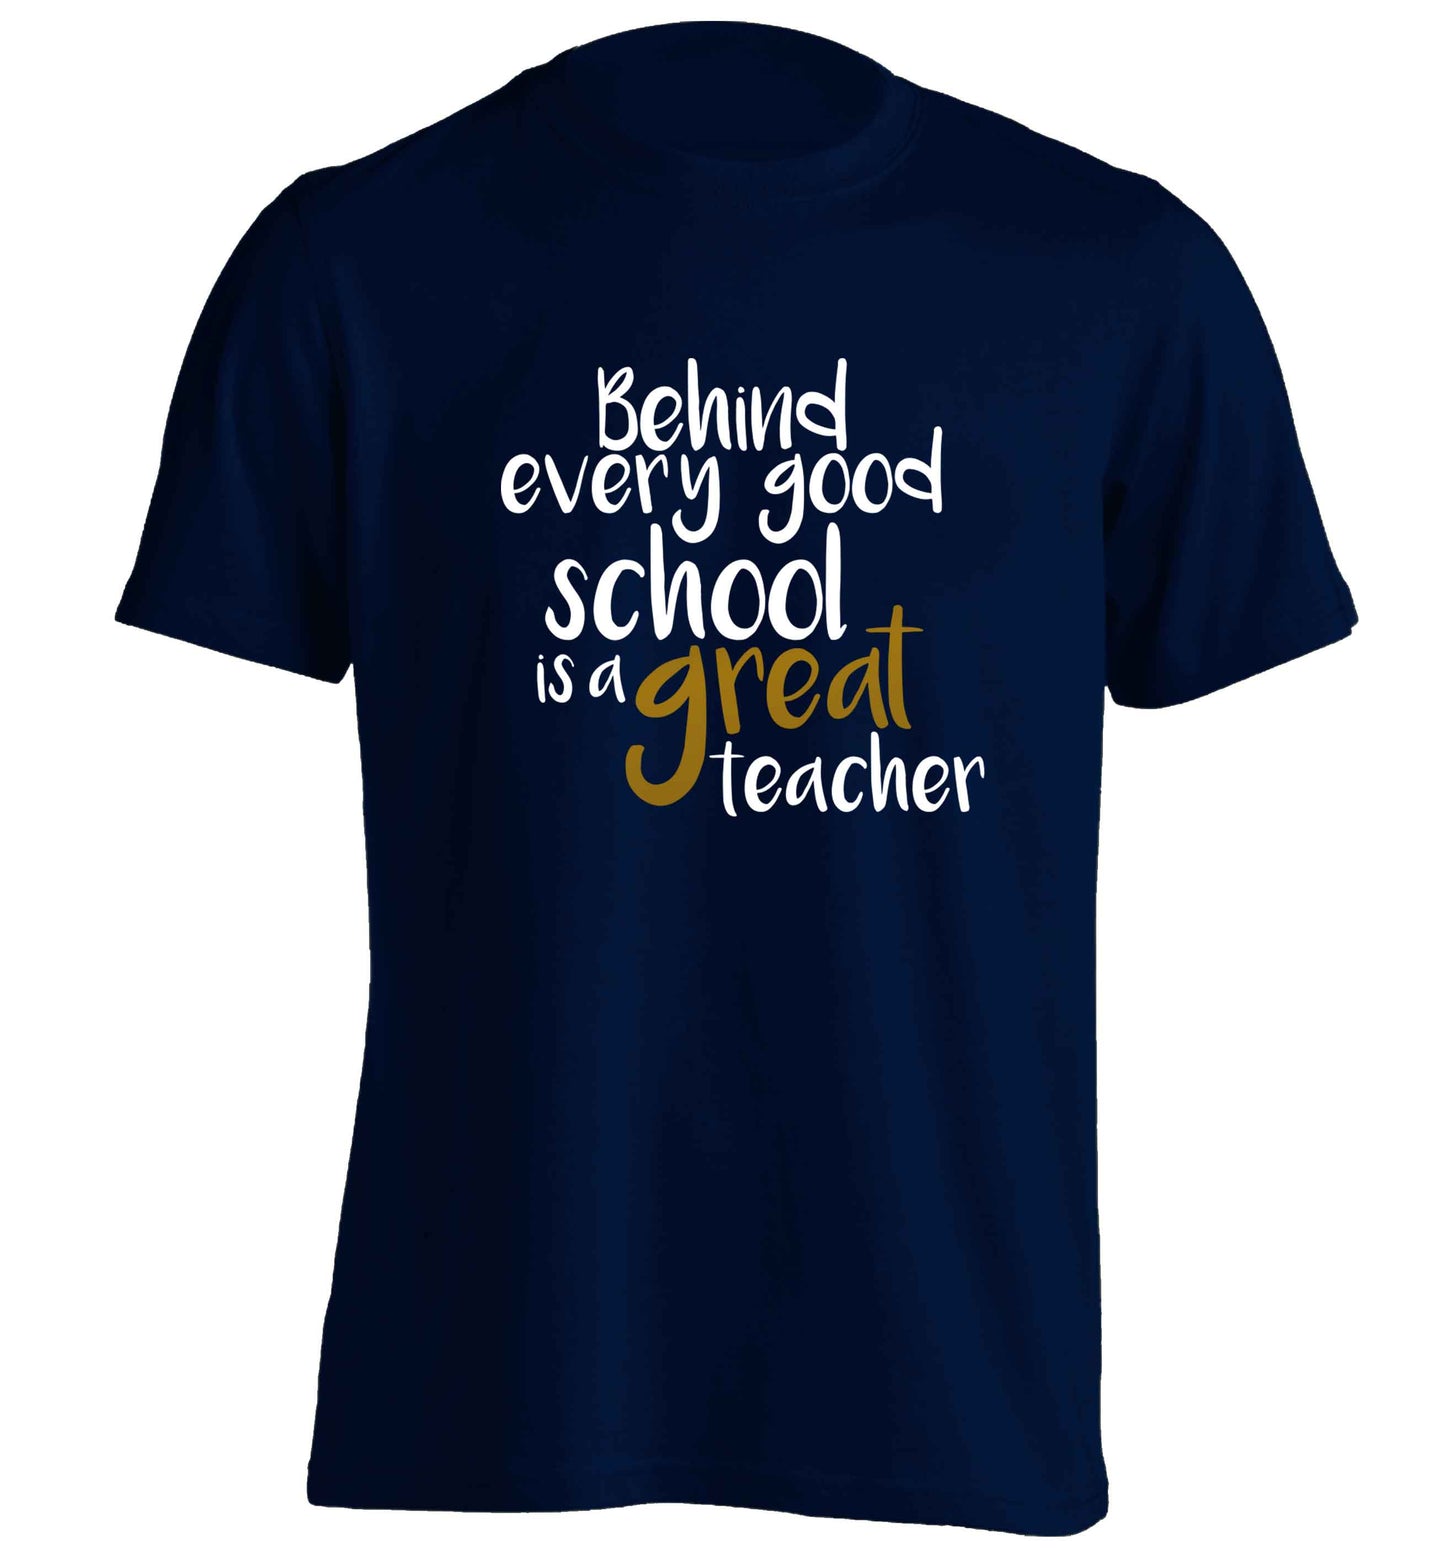 Behind every good school is a great teacher adults unisex navy Tshirt 2XL